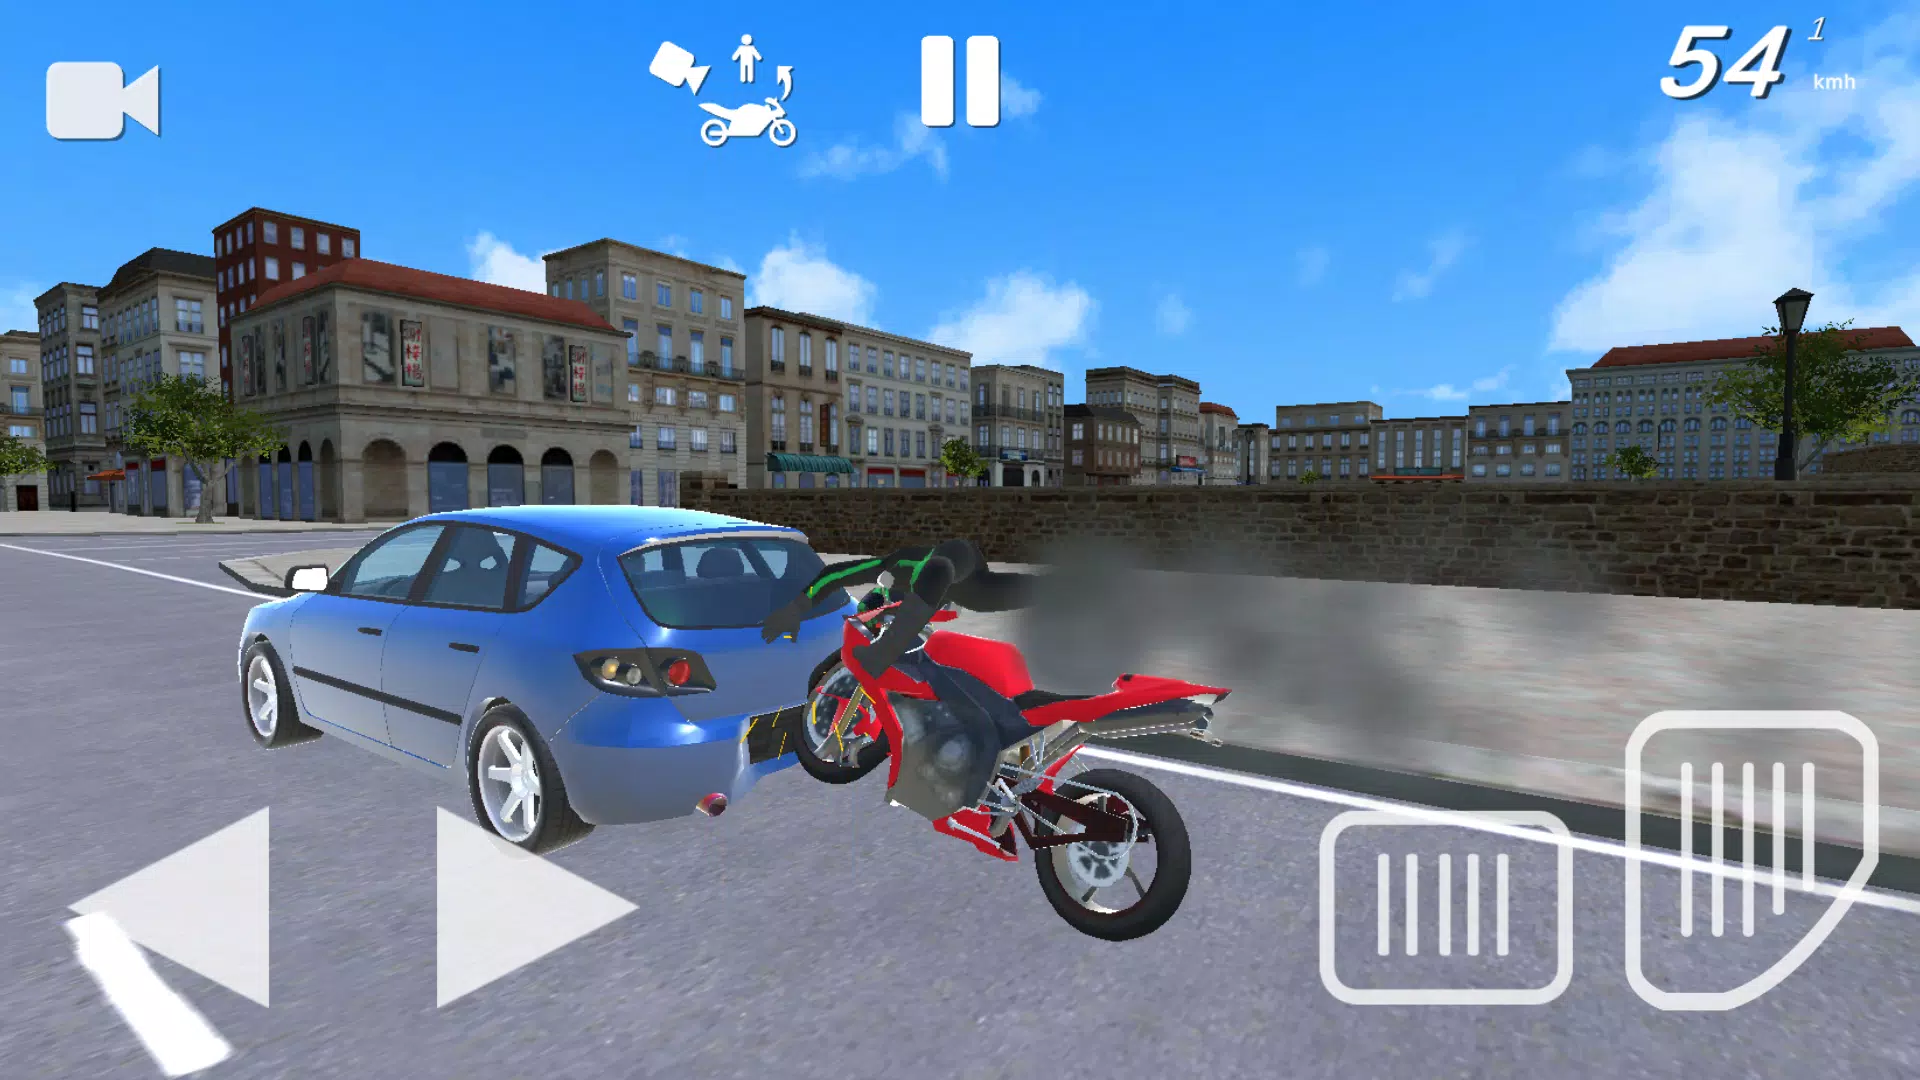 Car Crashing Crash Simulator on the App Store